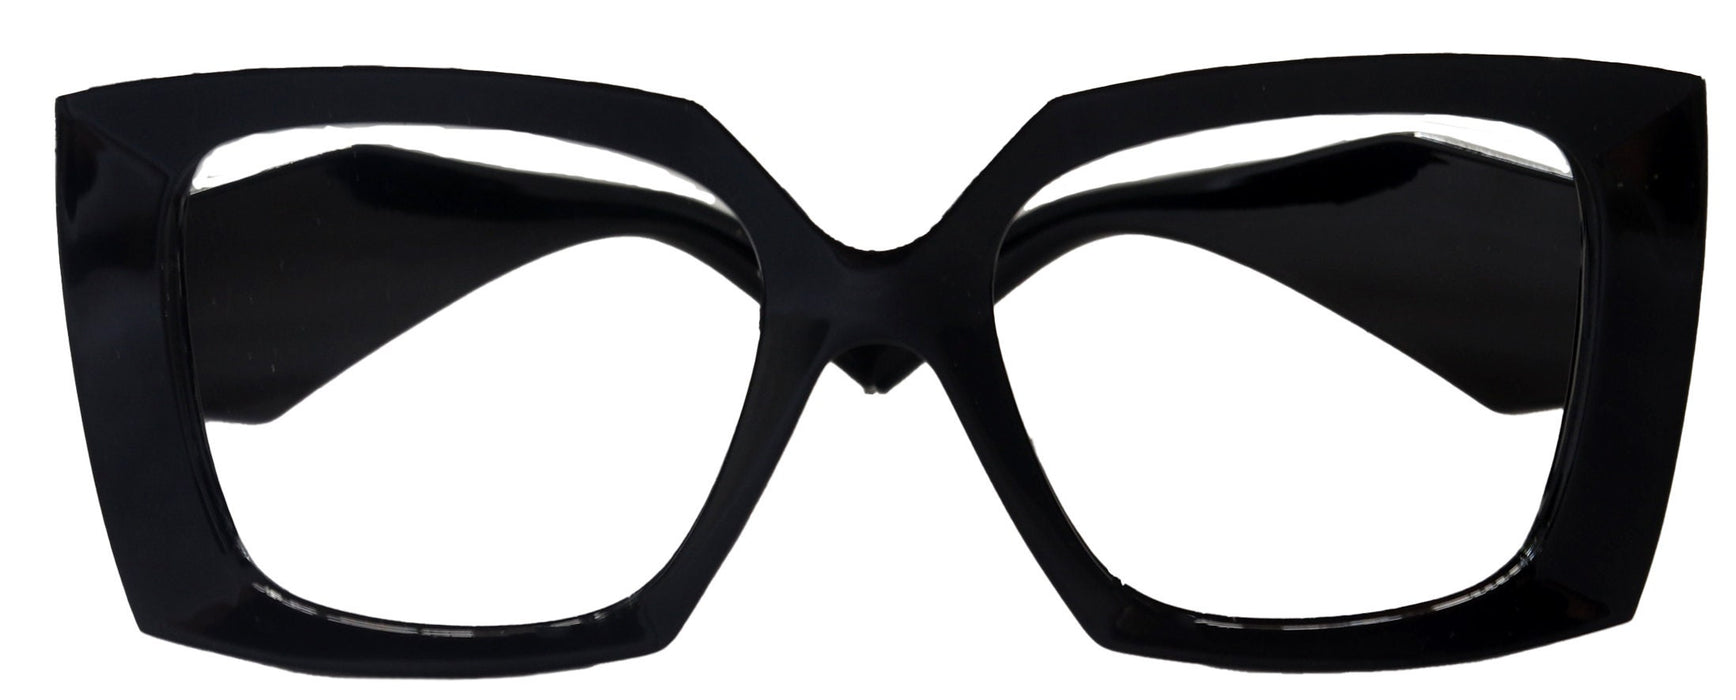 Penelope Black Large Oversized Reading Glasses, Women Readers, High End Reading Magnifying eyeglasses, Big Square optical Frames